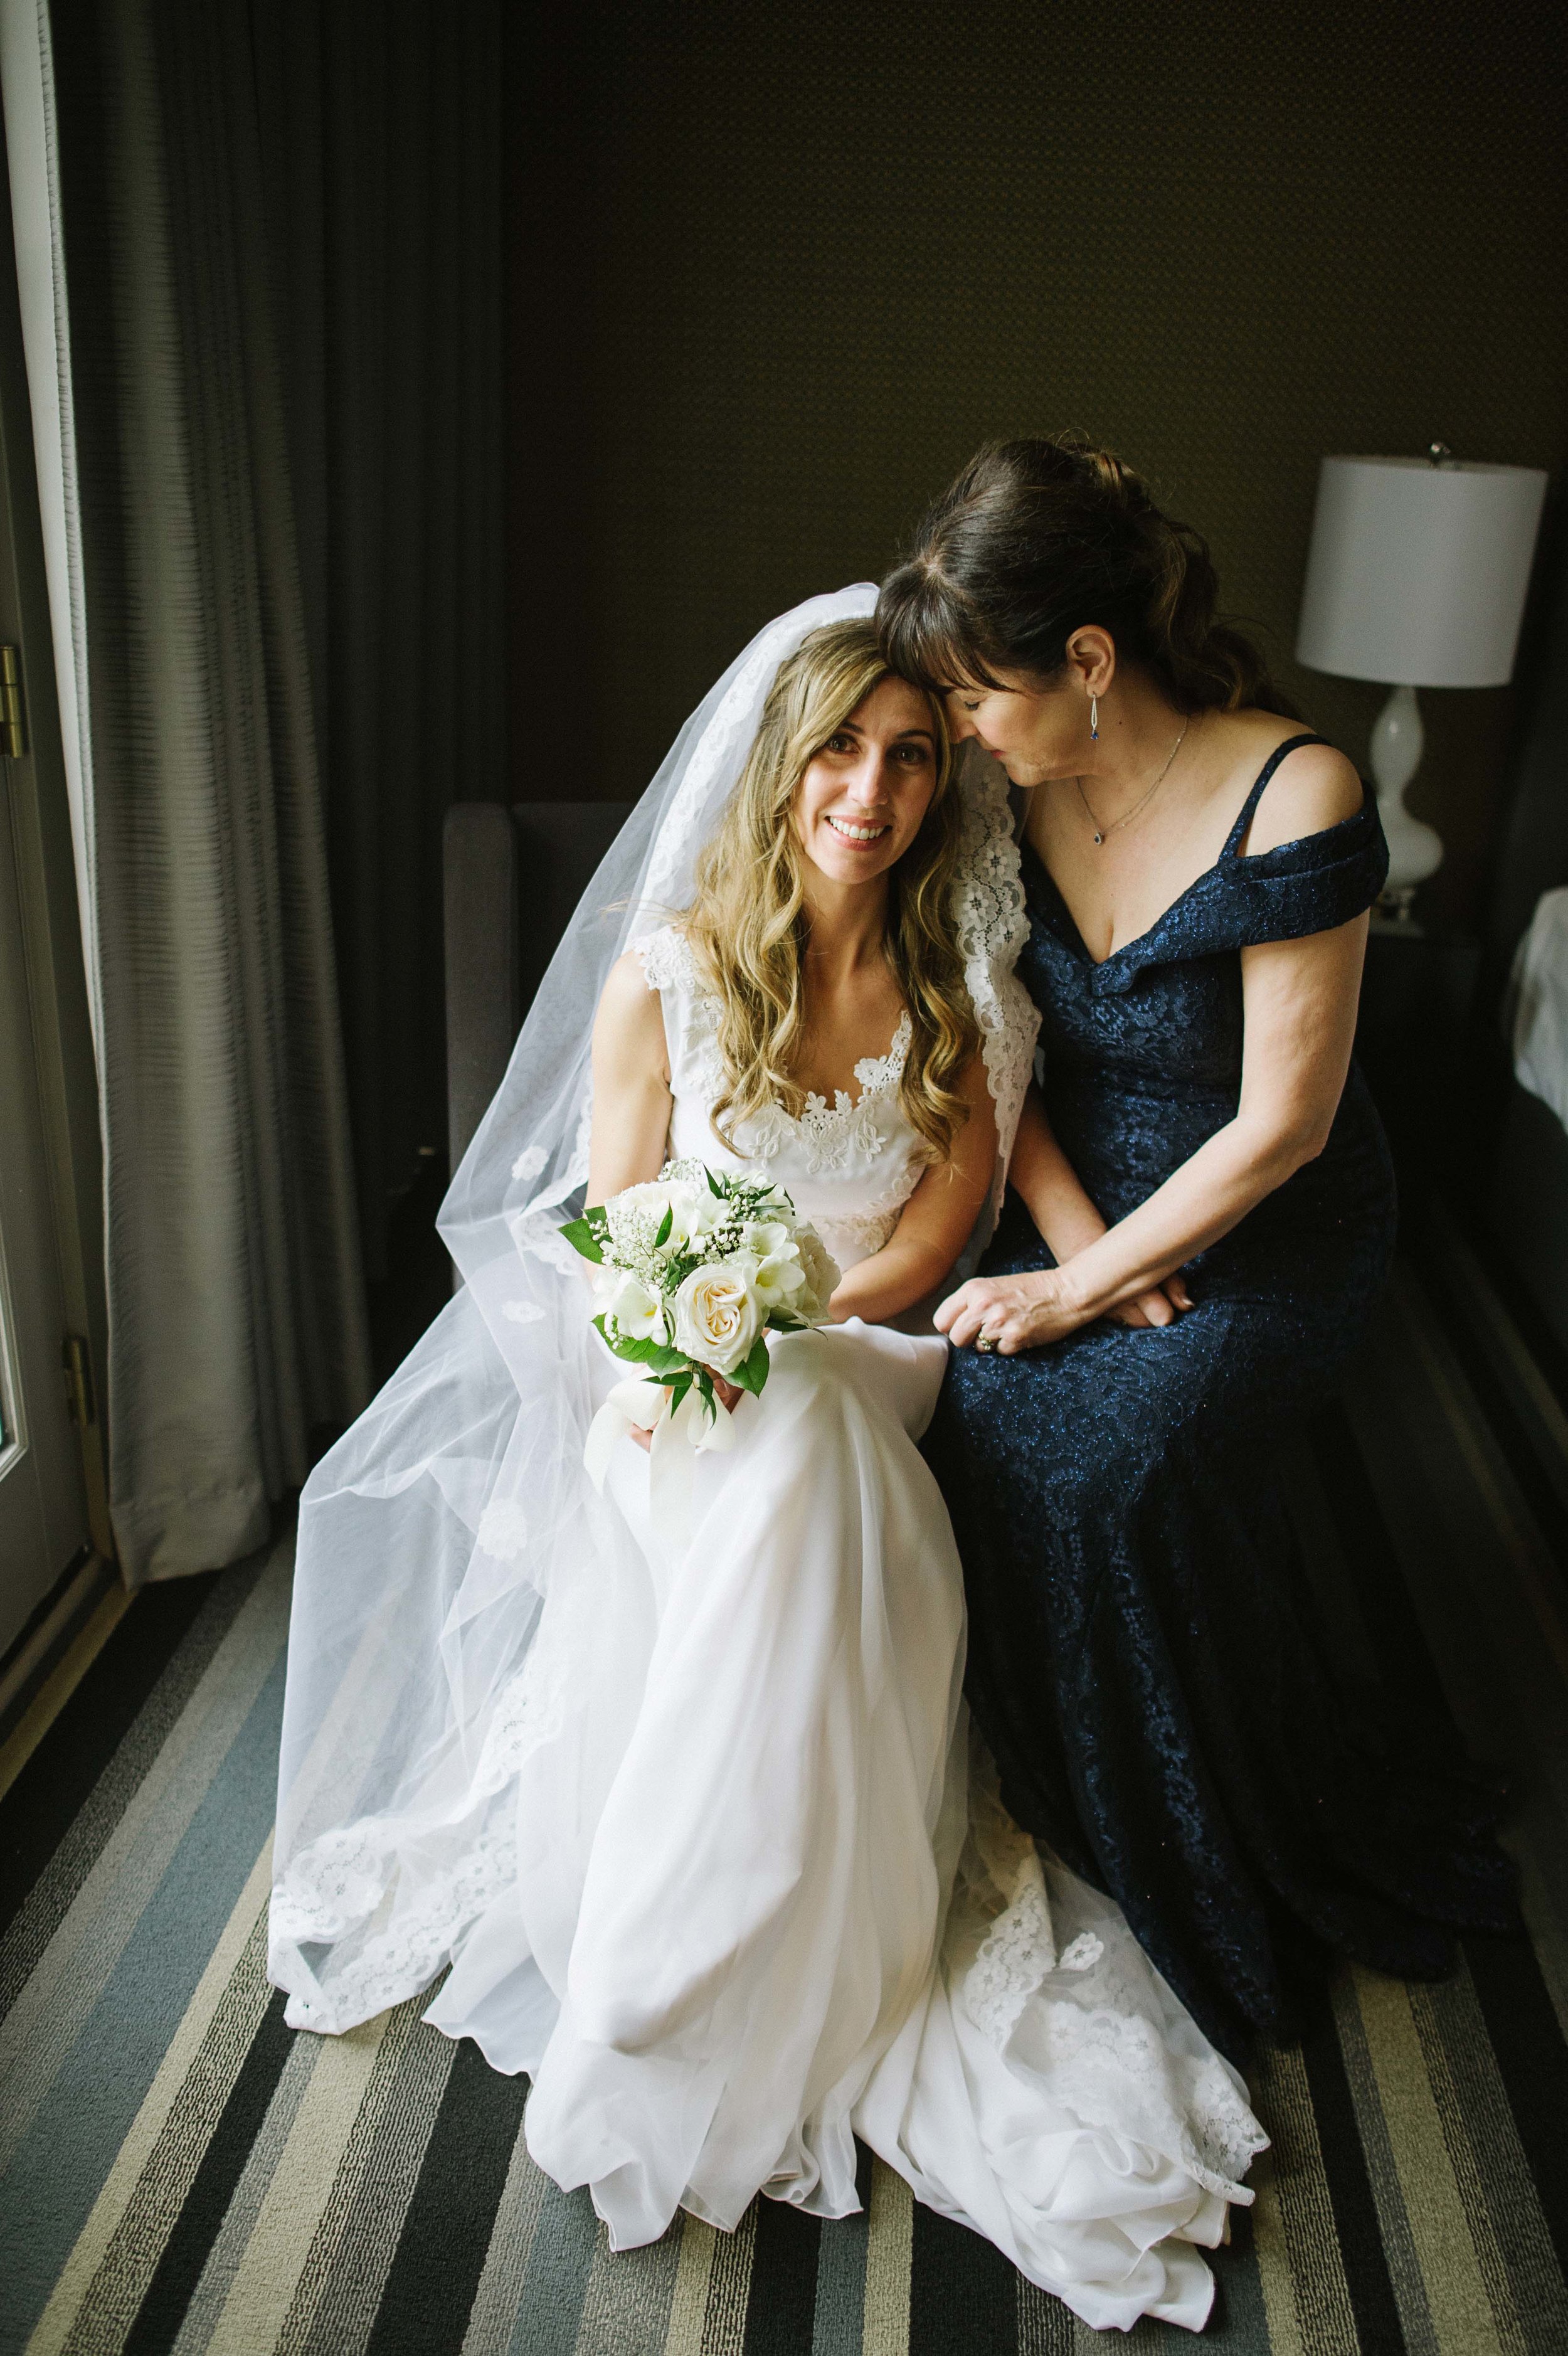 Christy-D-Swanberg-Photography-Calgary-wedding-elopement-12.jpg